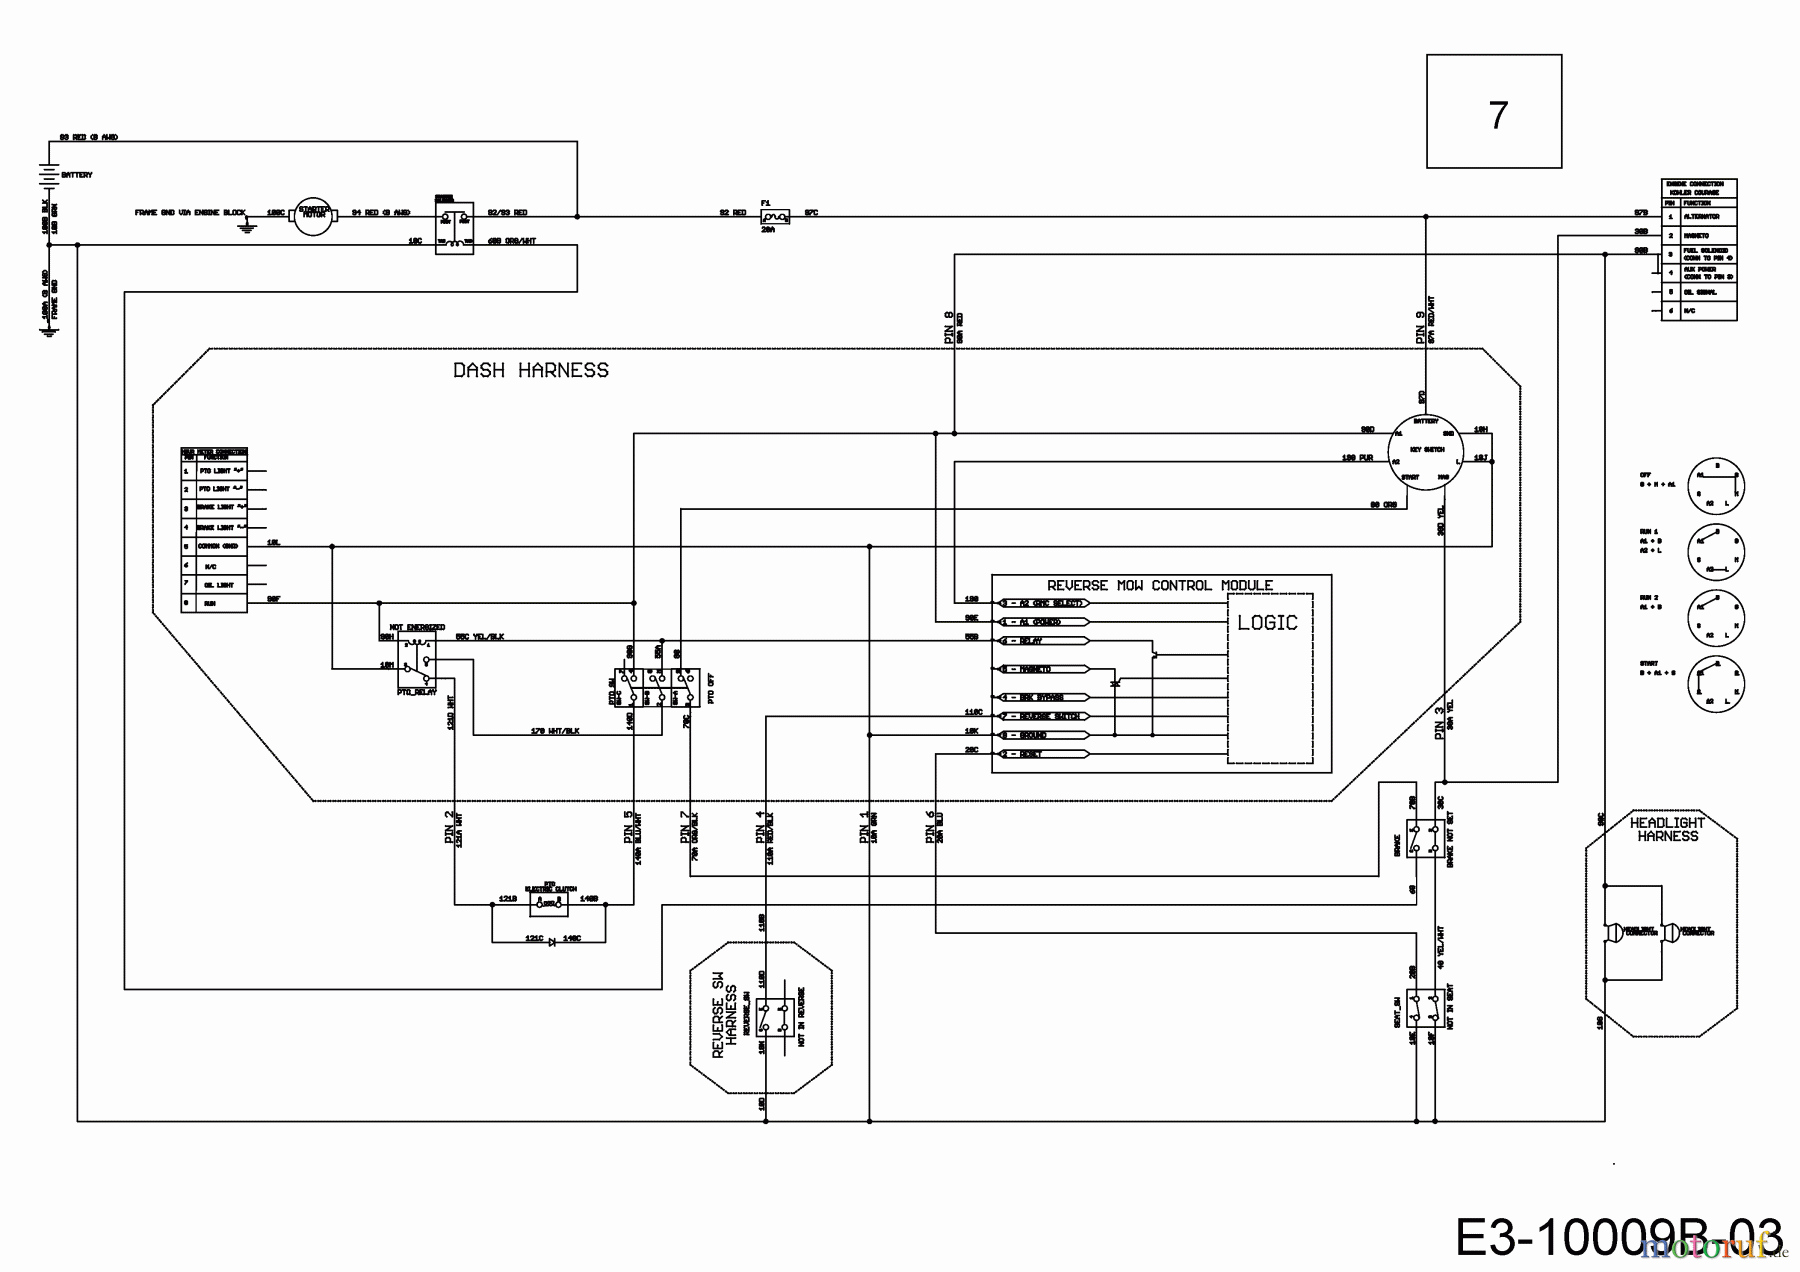  Cub Cadet Lawn tractors XT1 OS107 13B8A1CS603  (2019) Wiring diagram dashboard